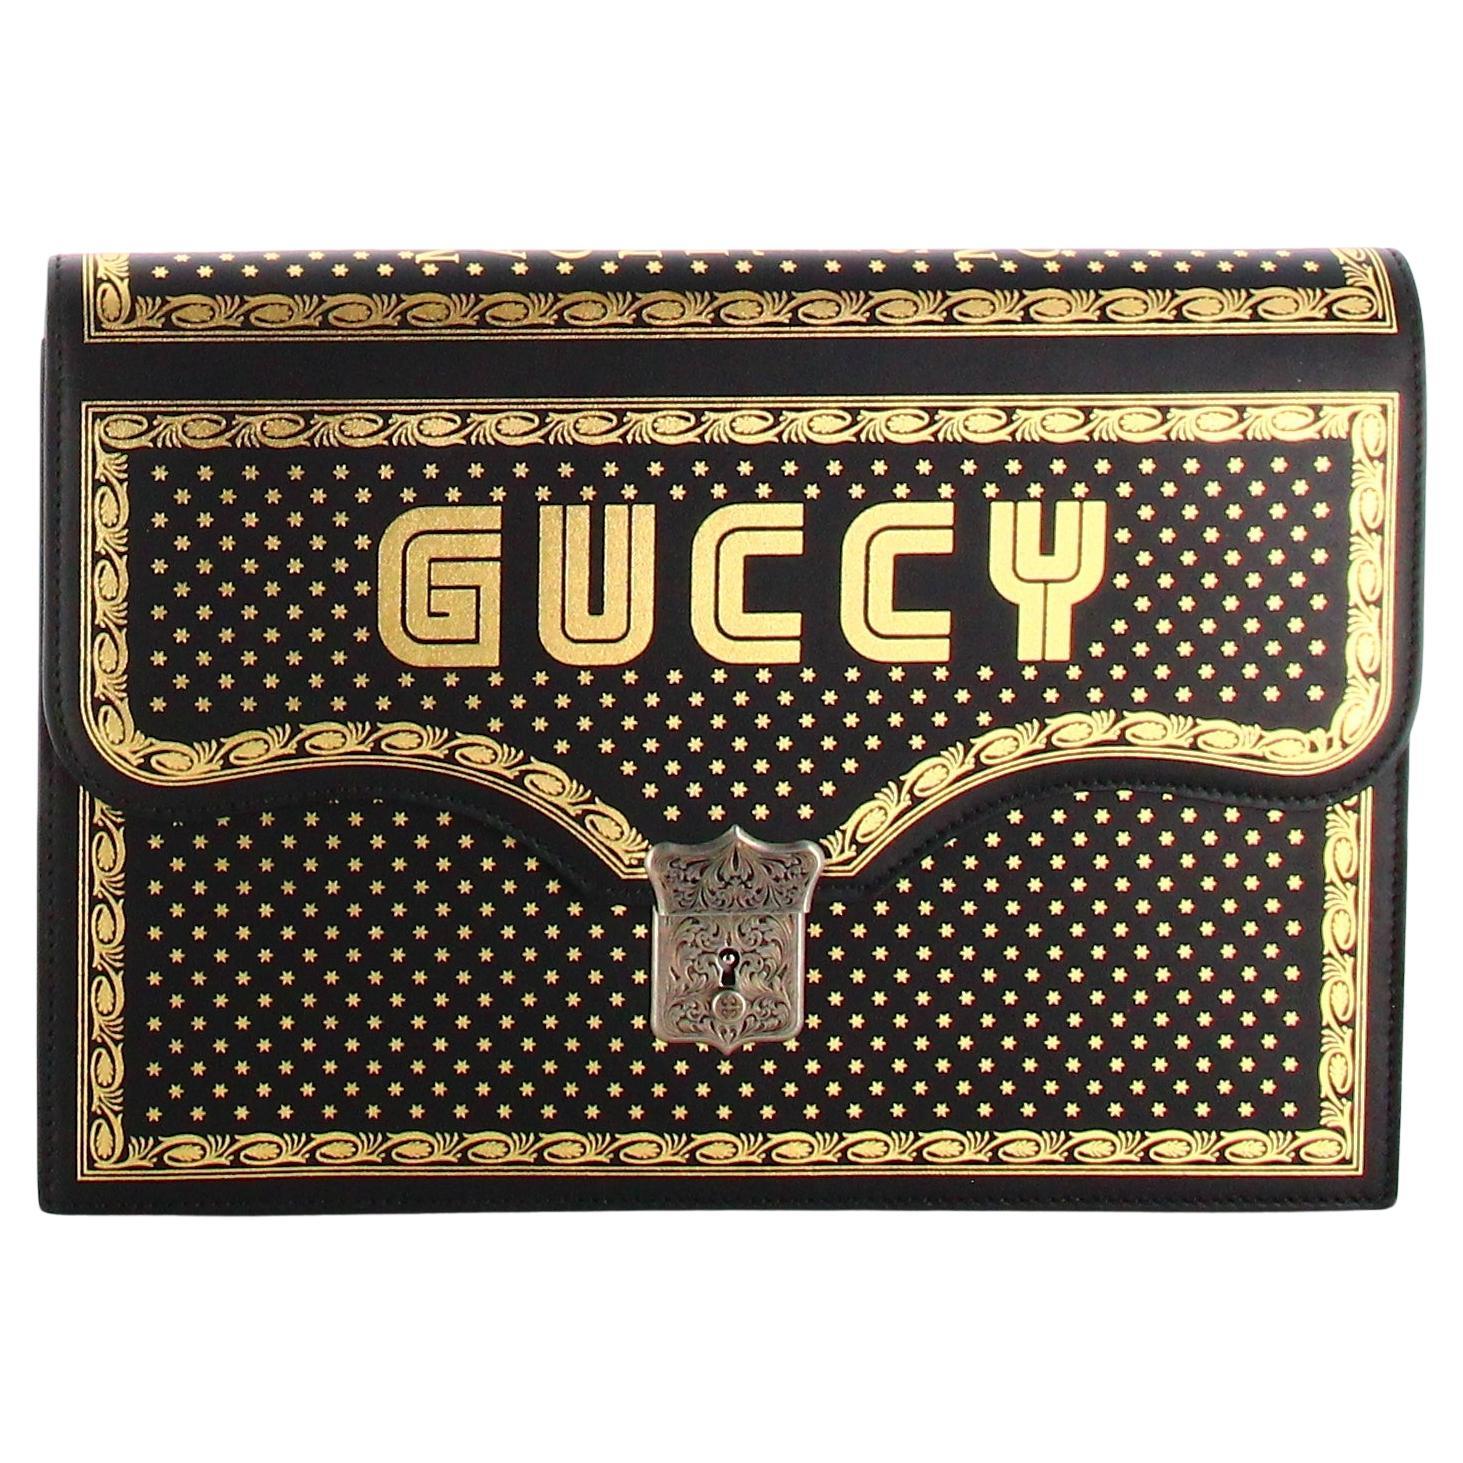 Gucci Portfolio Clutch Bag For Sale